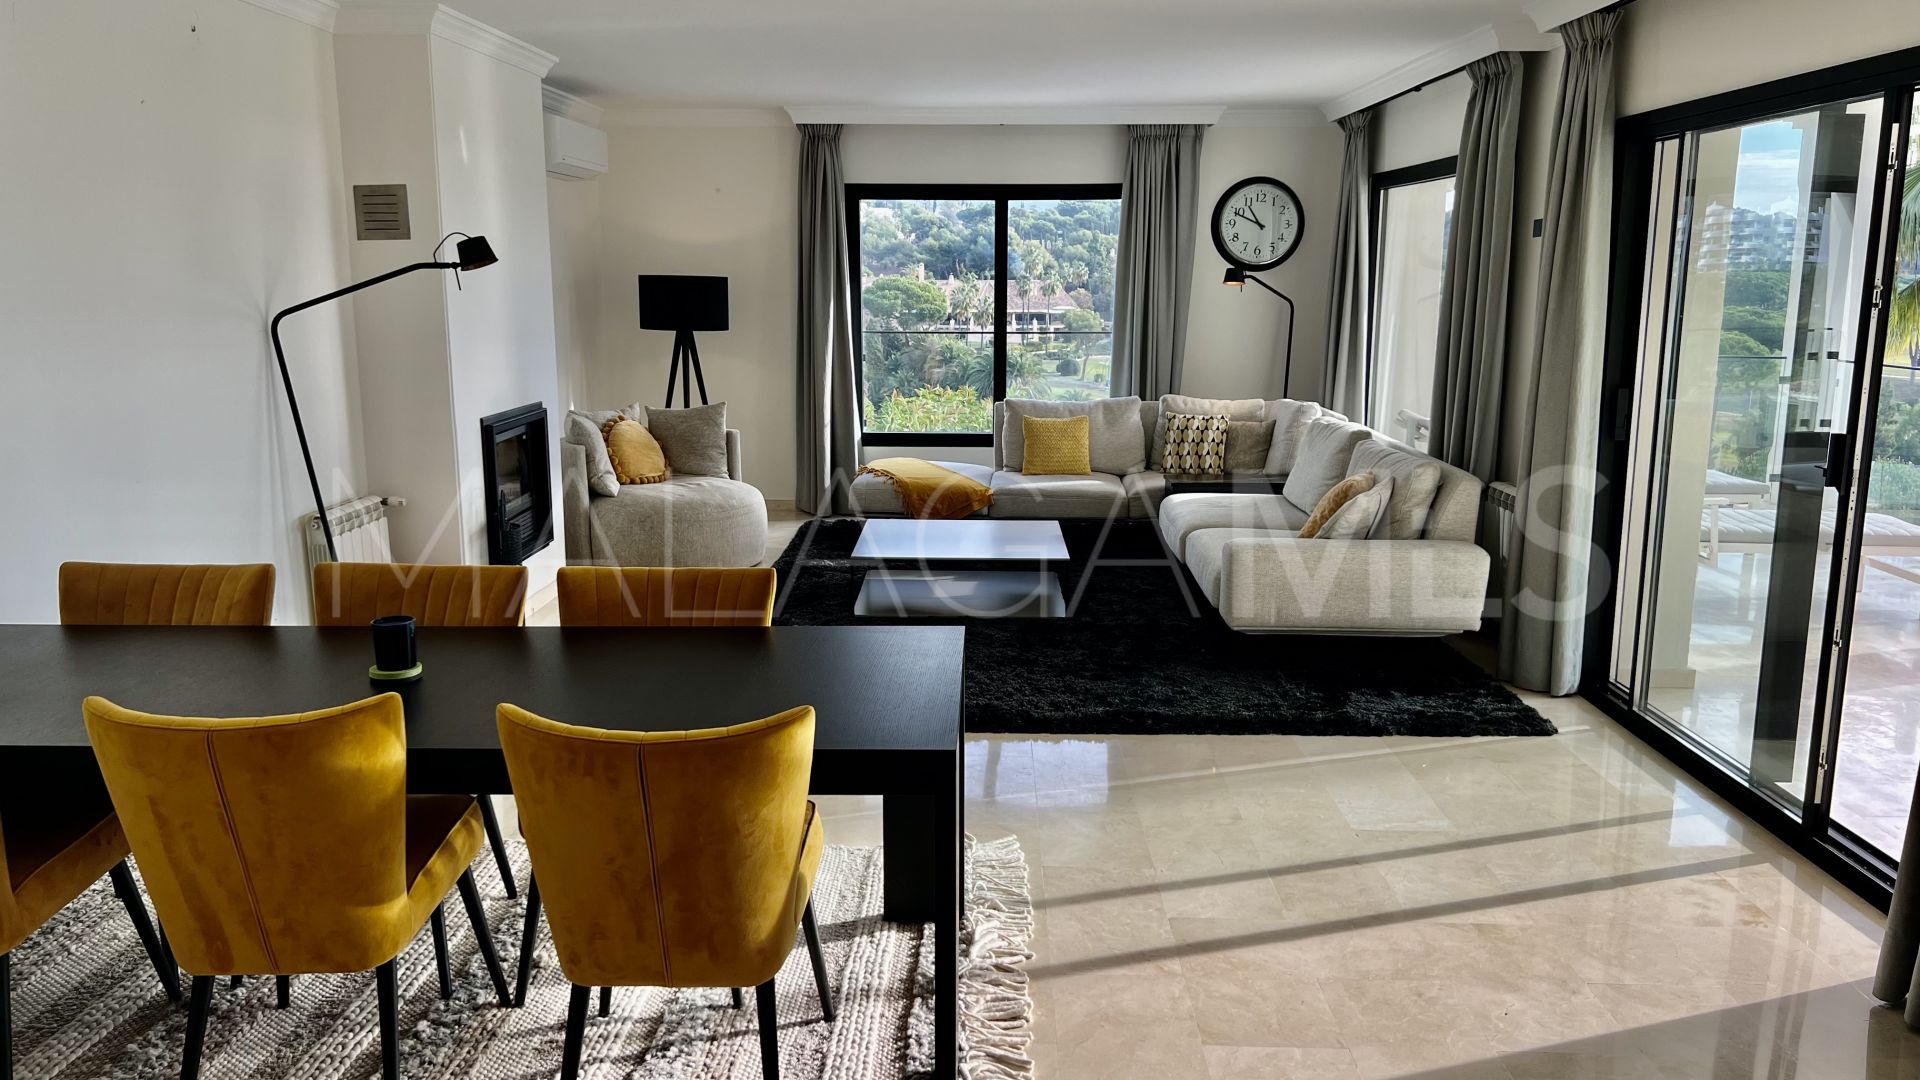 4 bedrooms villa in Rio Real Golf for sale